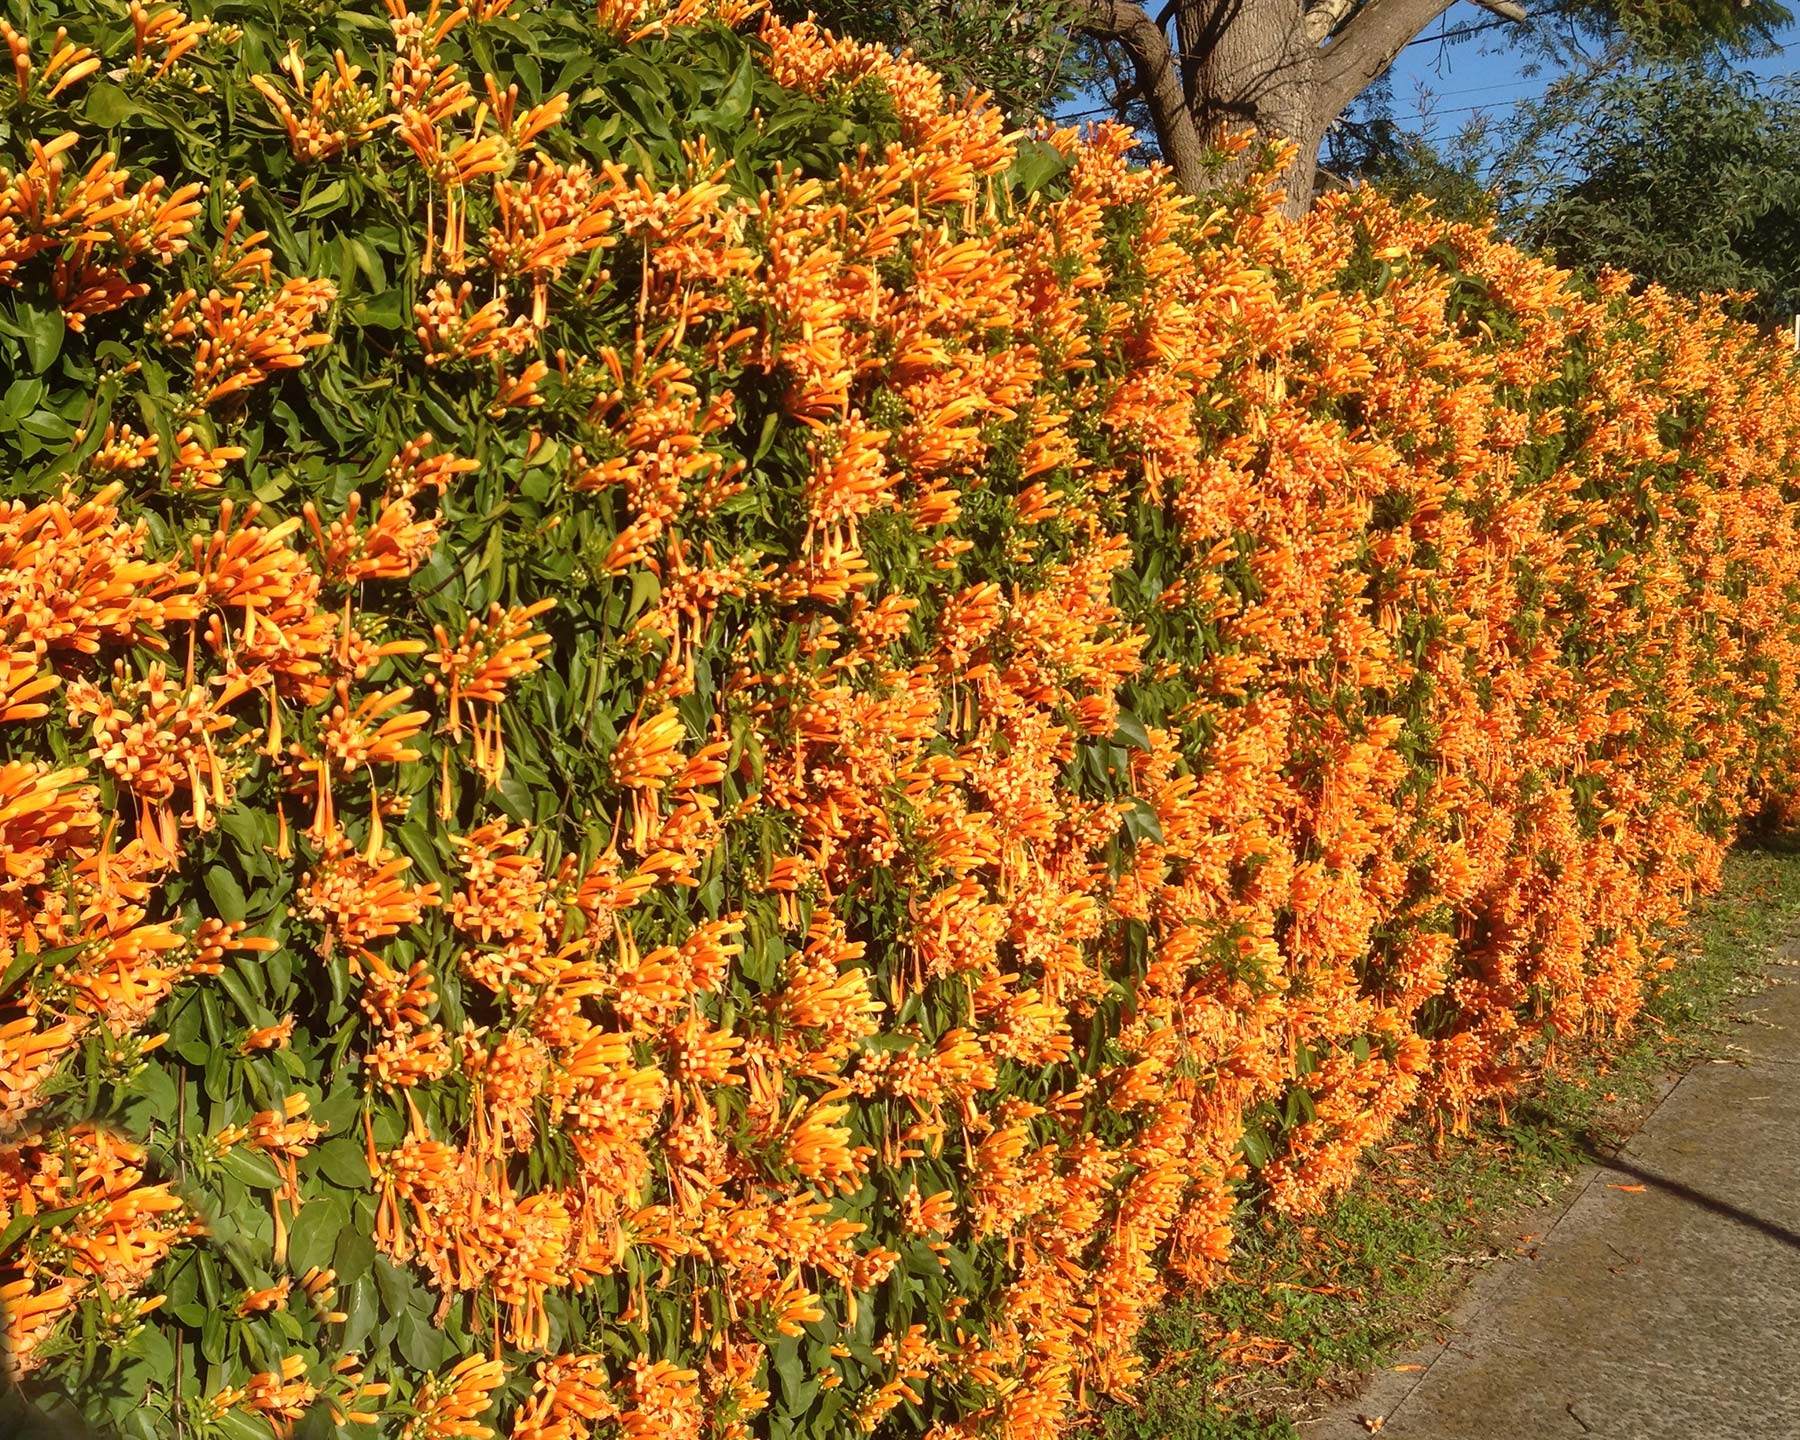 Pyrostegia venusta dense orange trumpet flowers make a wonderful display in winter